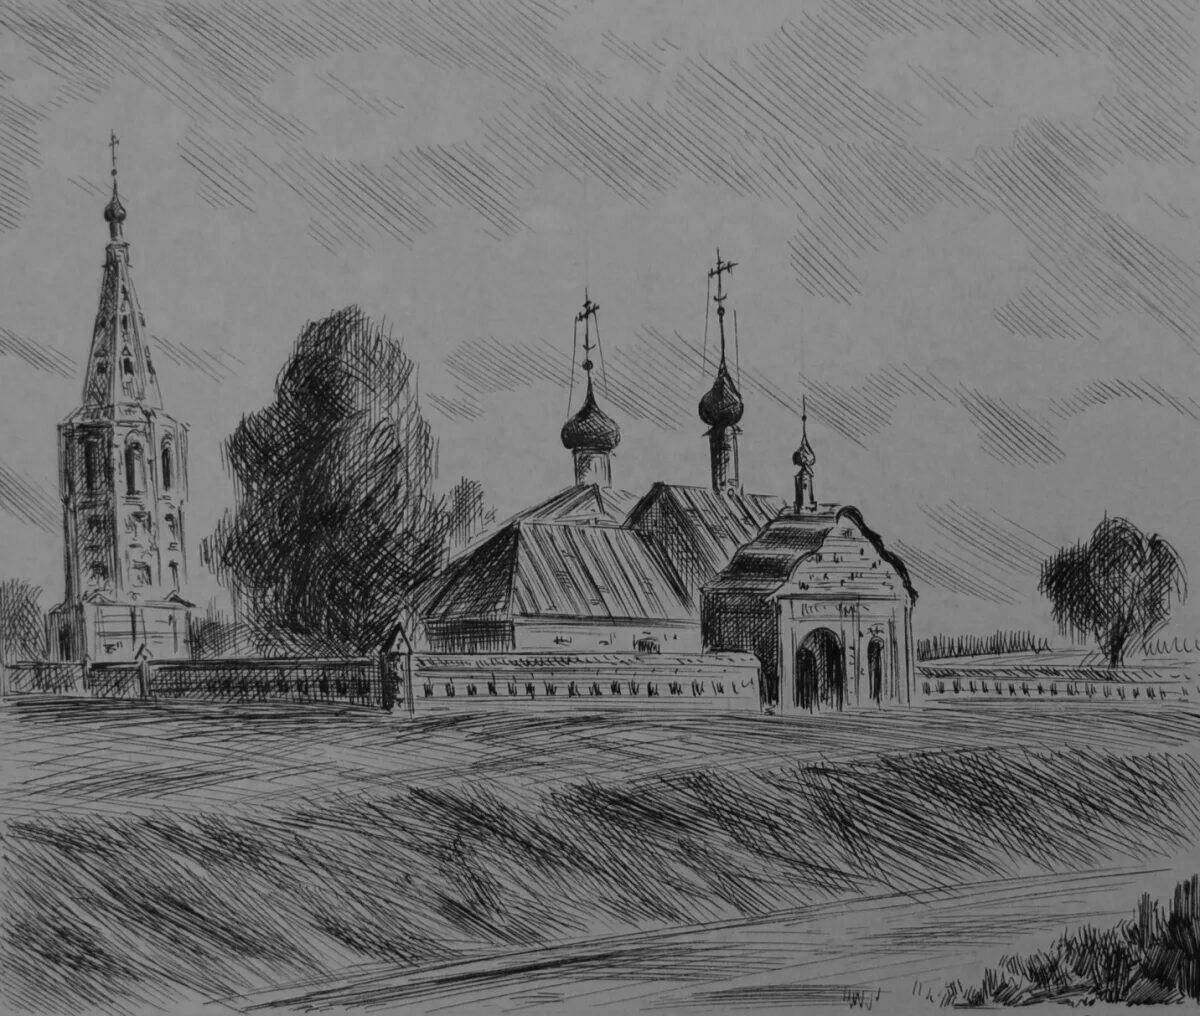 Coloring the immaculate Ryazan Kremlin